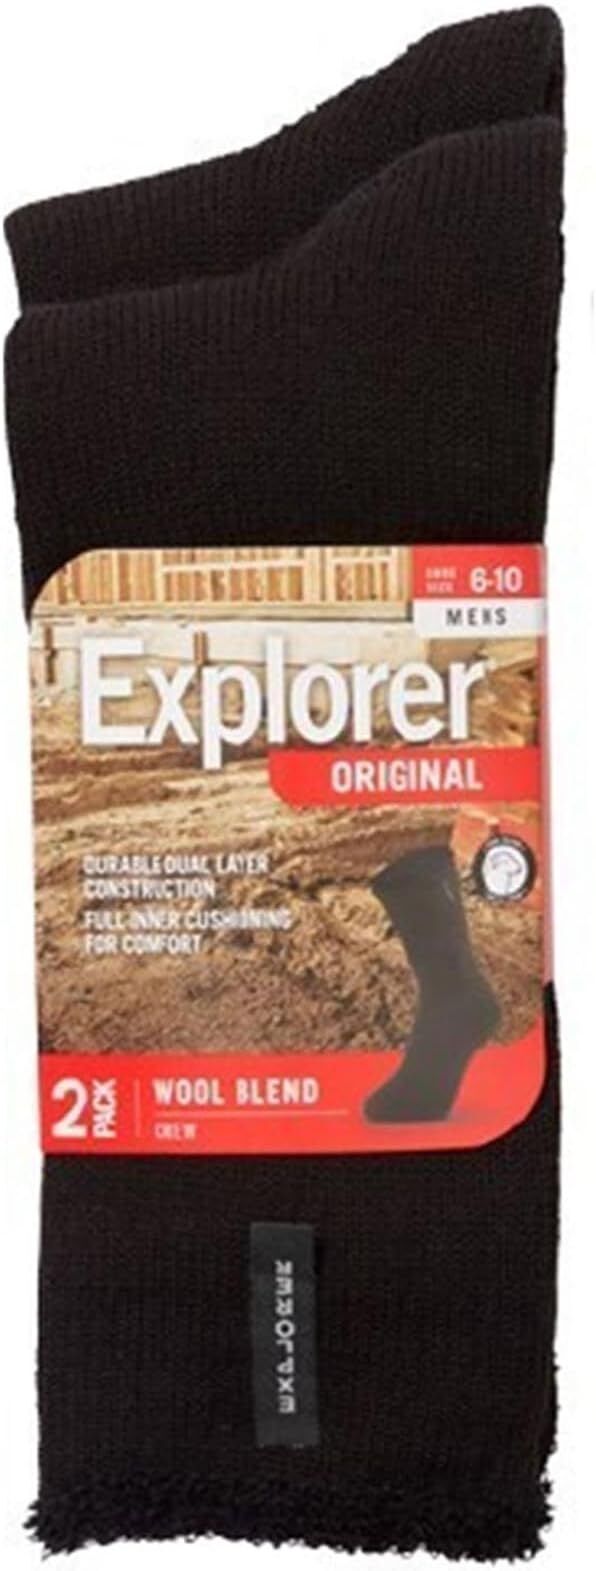 Bonds Explorer Original Breathable Comfortable Socks 8 Pack Ks S11392